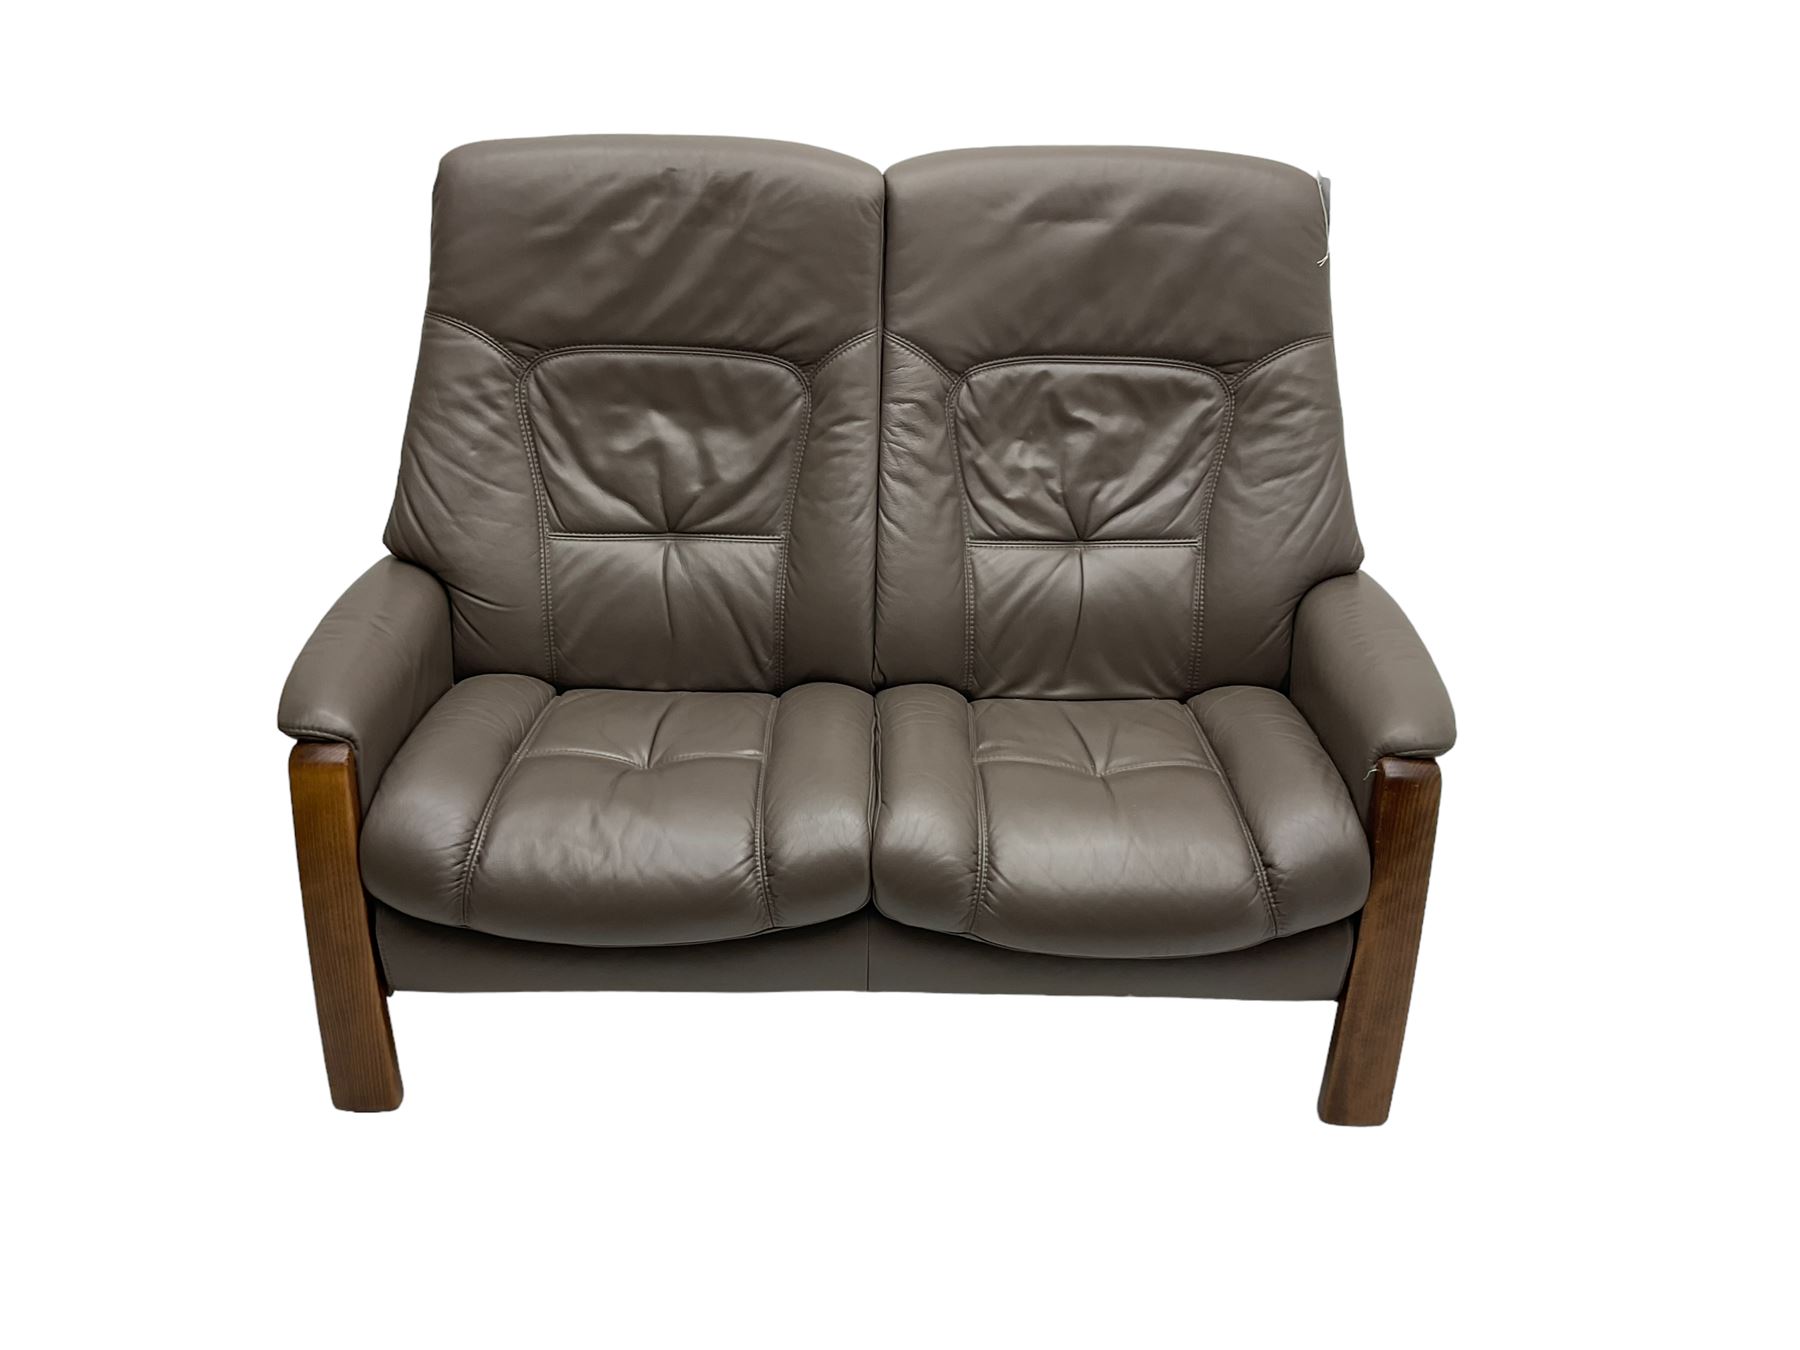 Himolla - two seat reclining sofa - Image 2 of 6